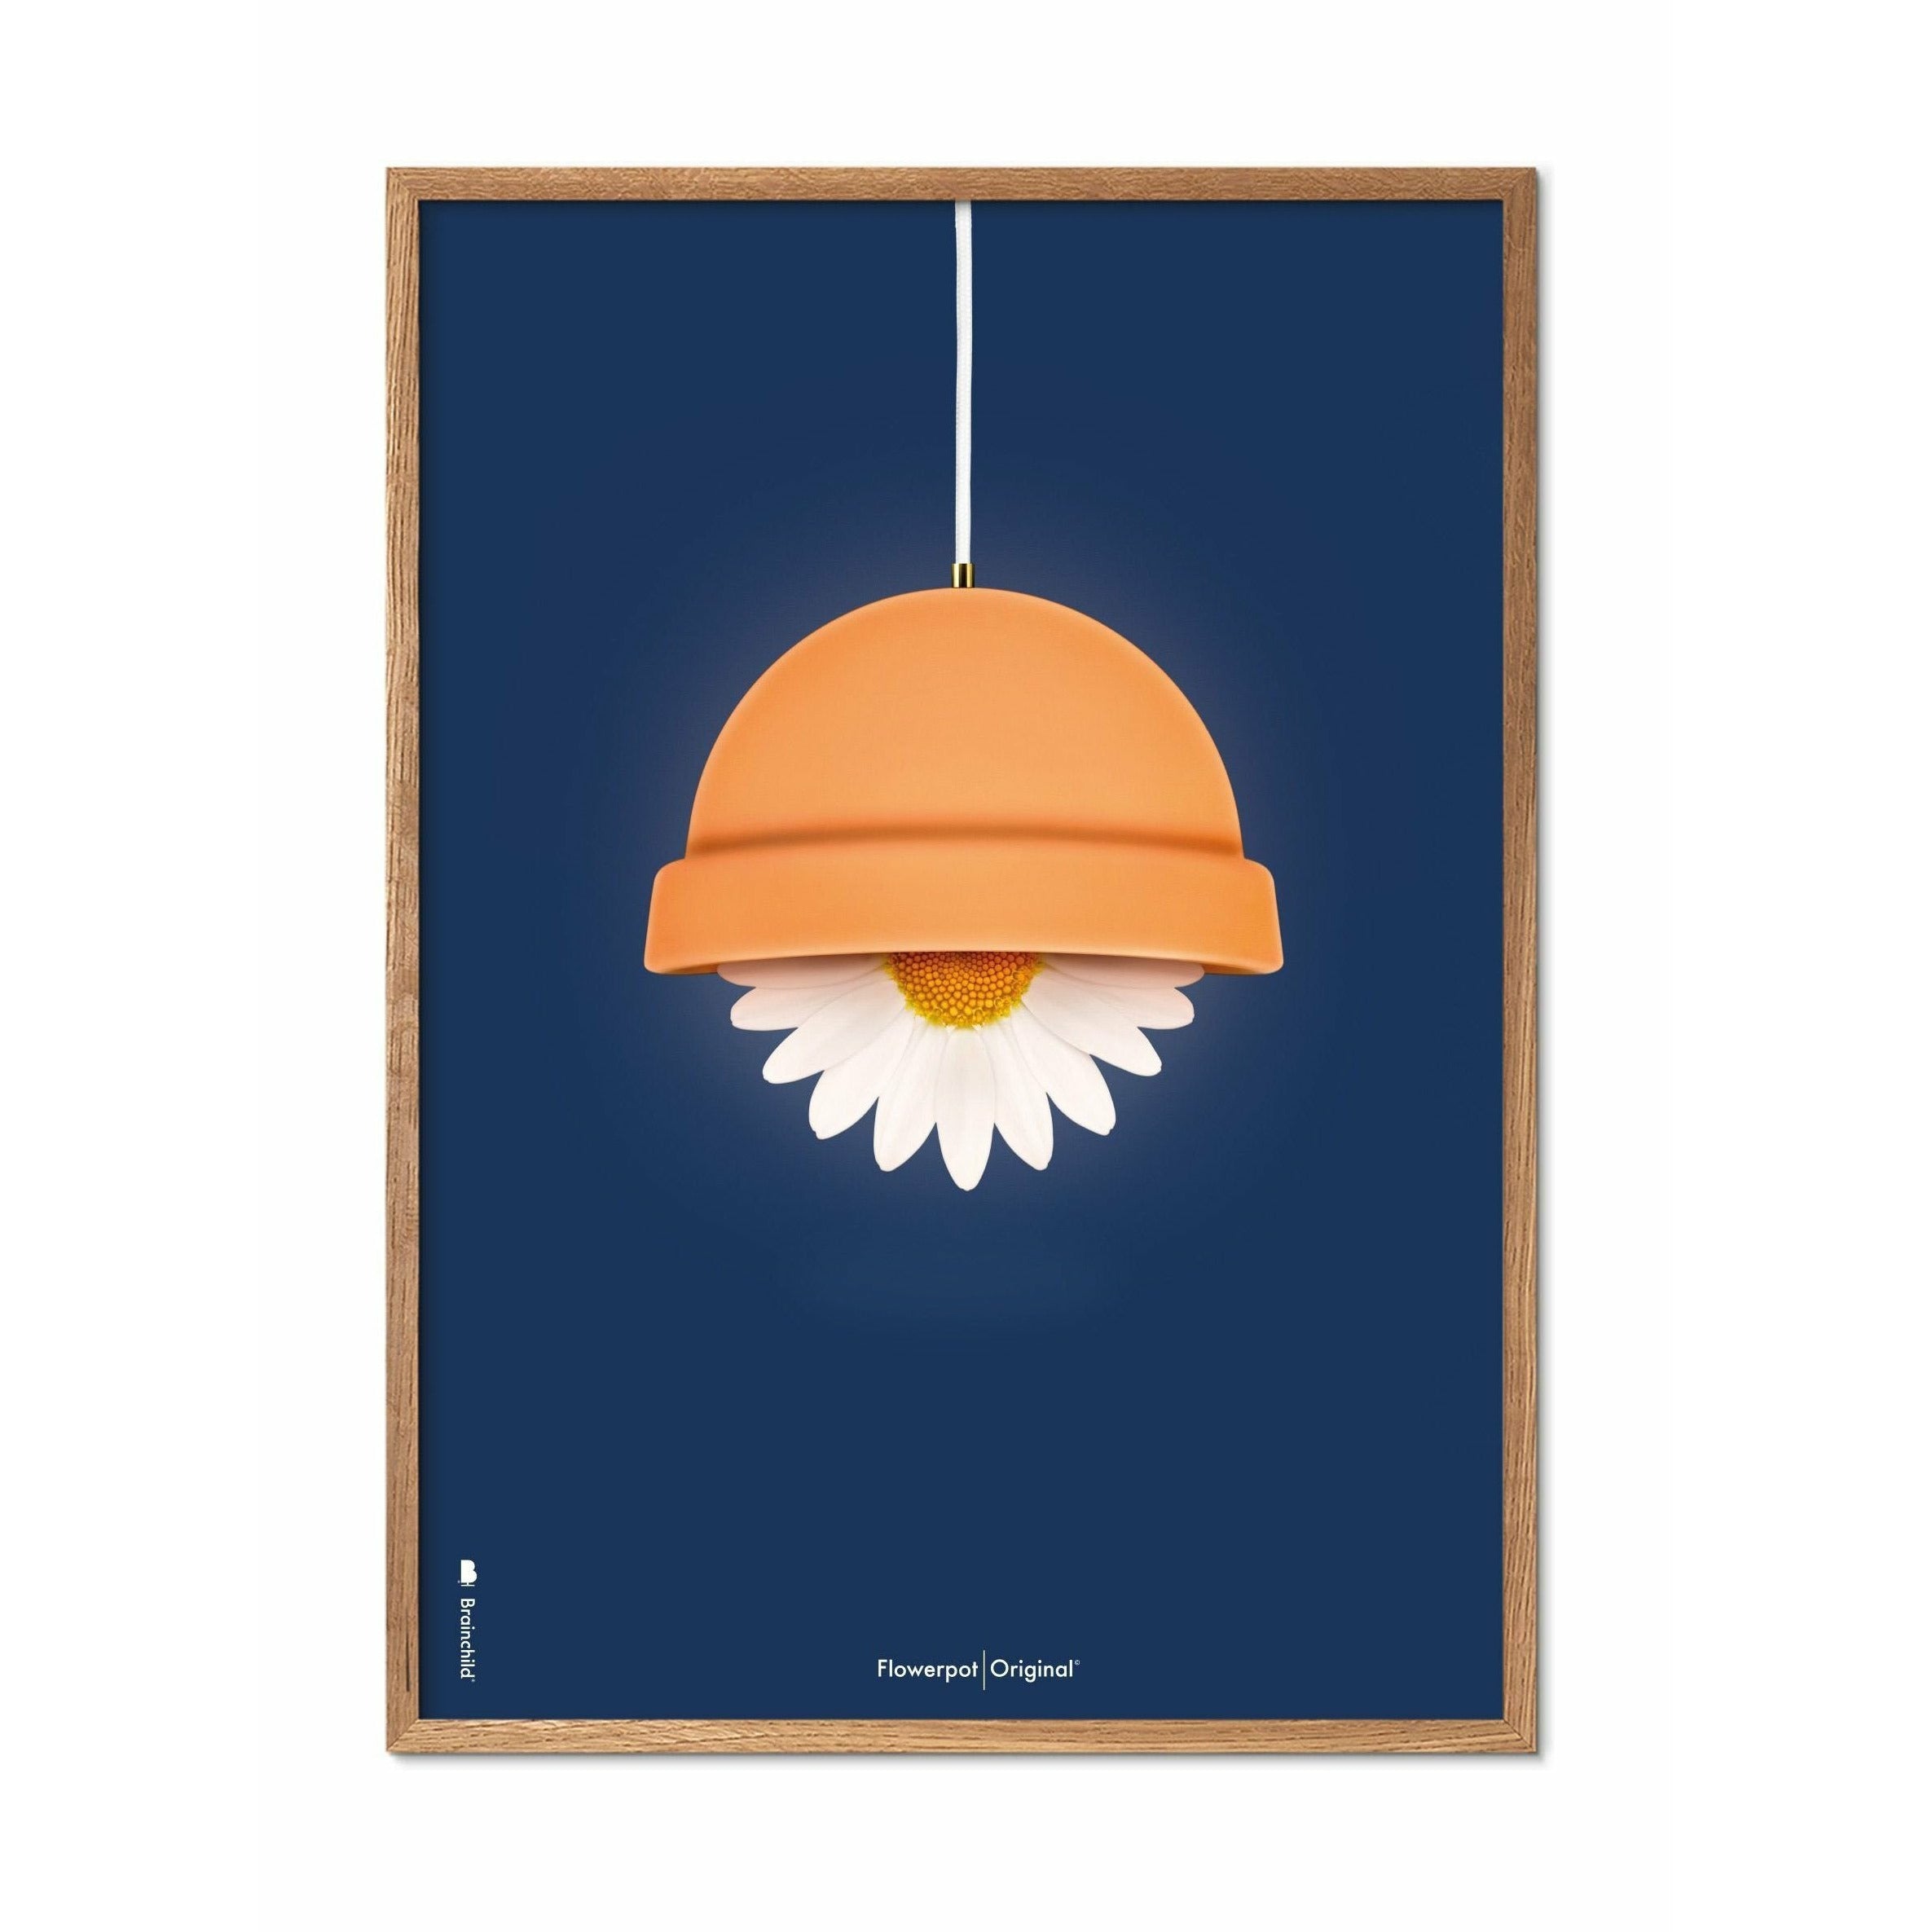 Brainchild Flowerpot Classic Poster, Light Wood Frame A5, Dark Blue Background